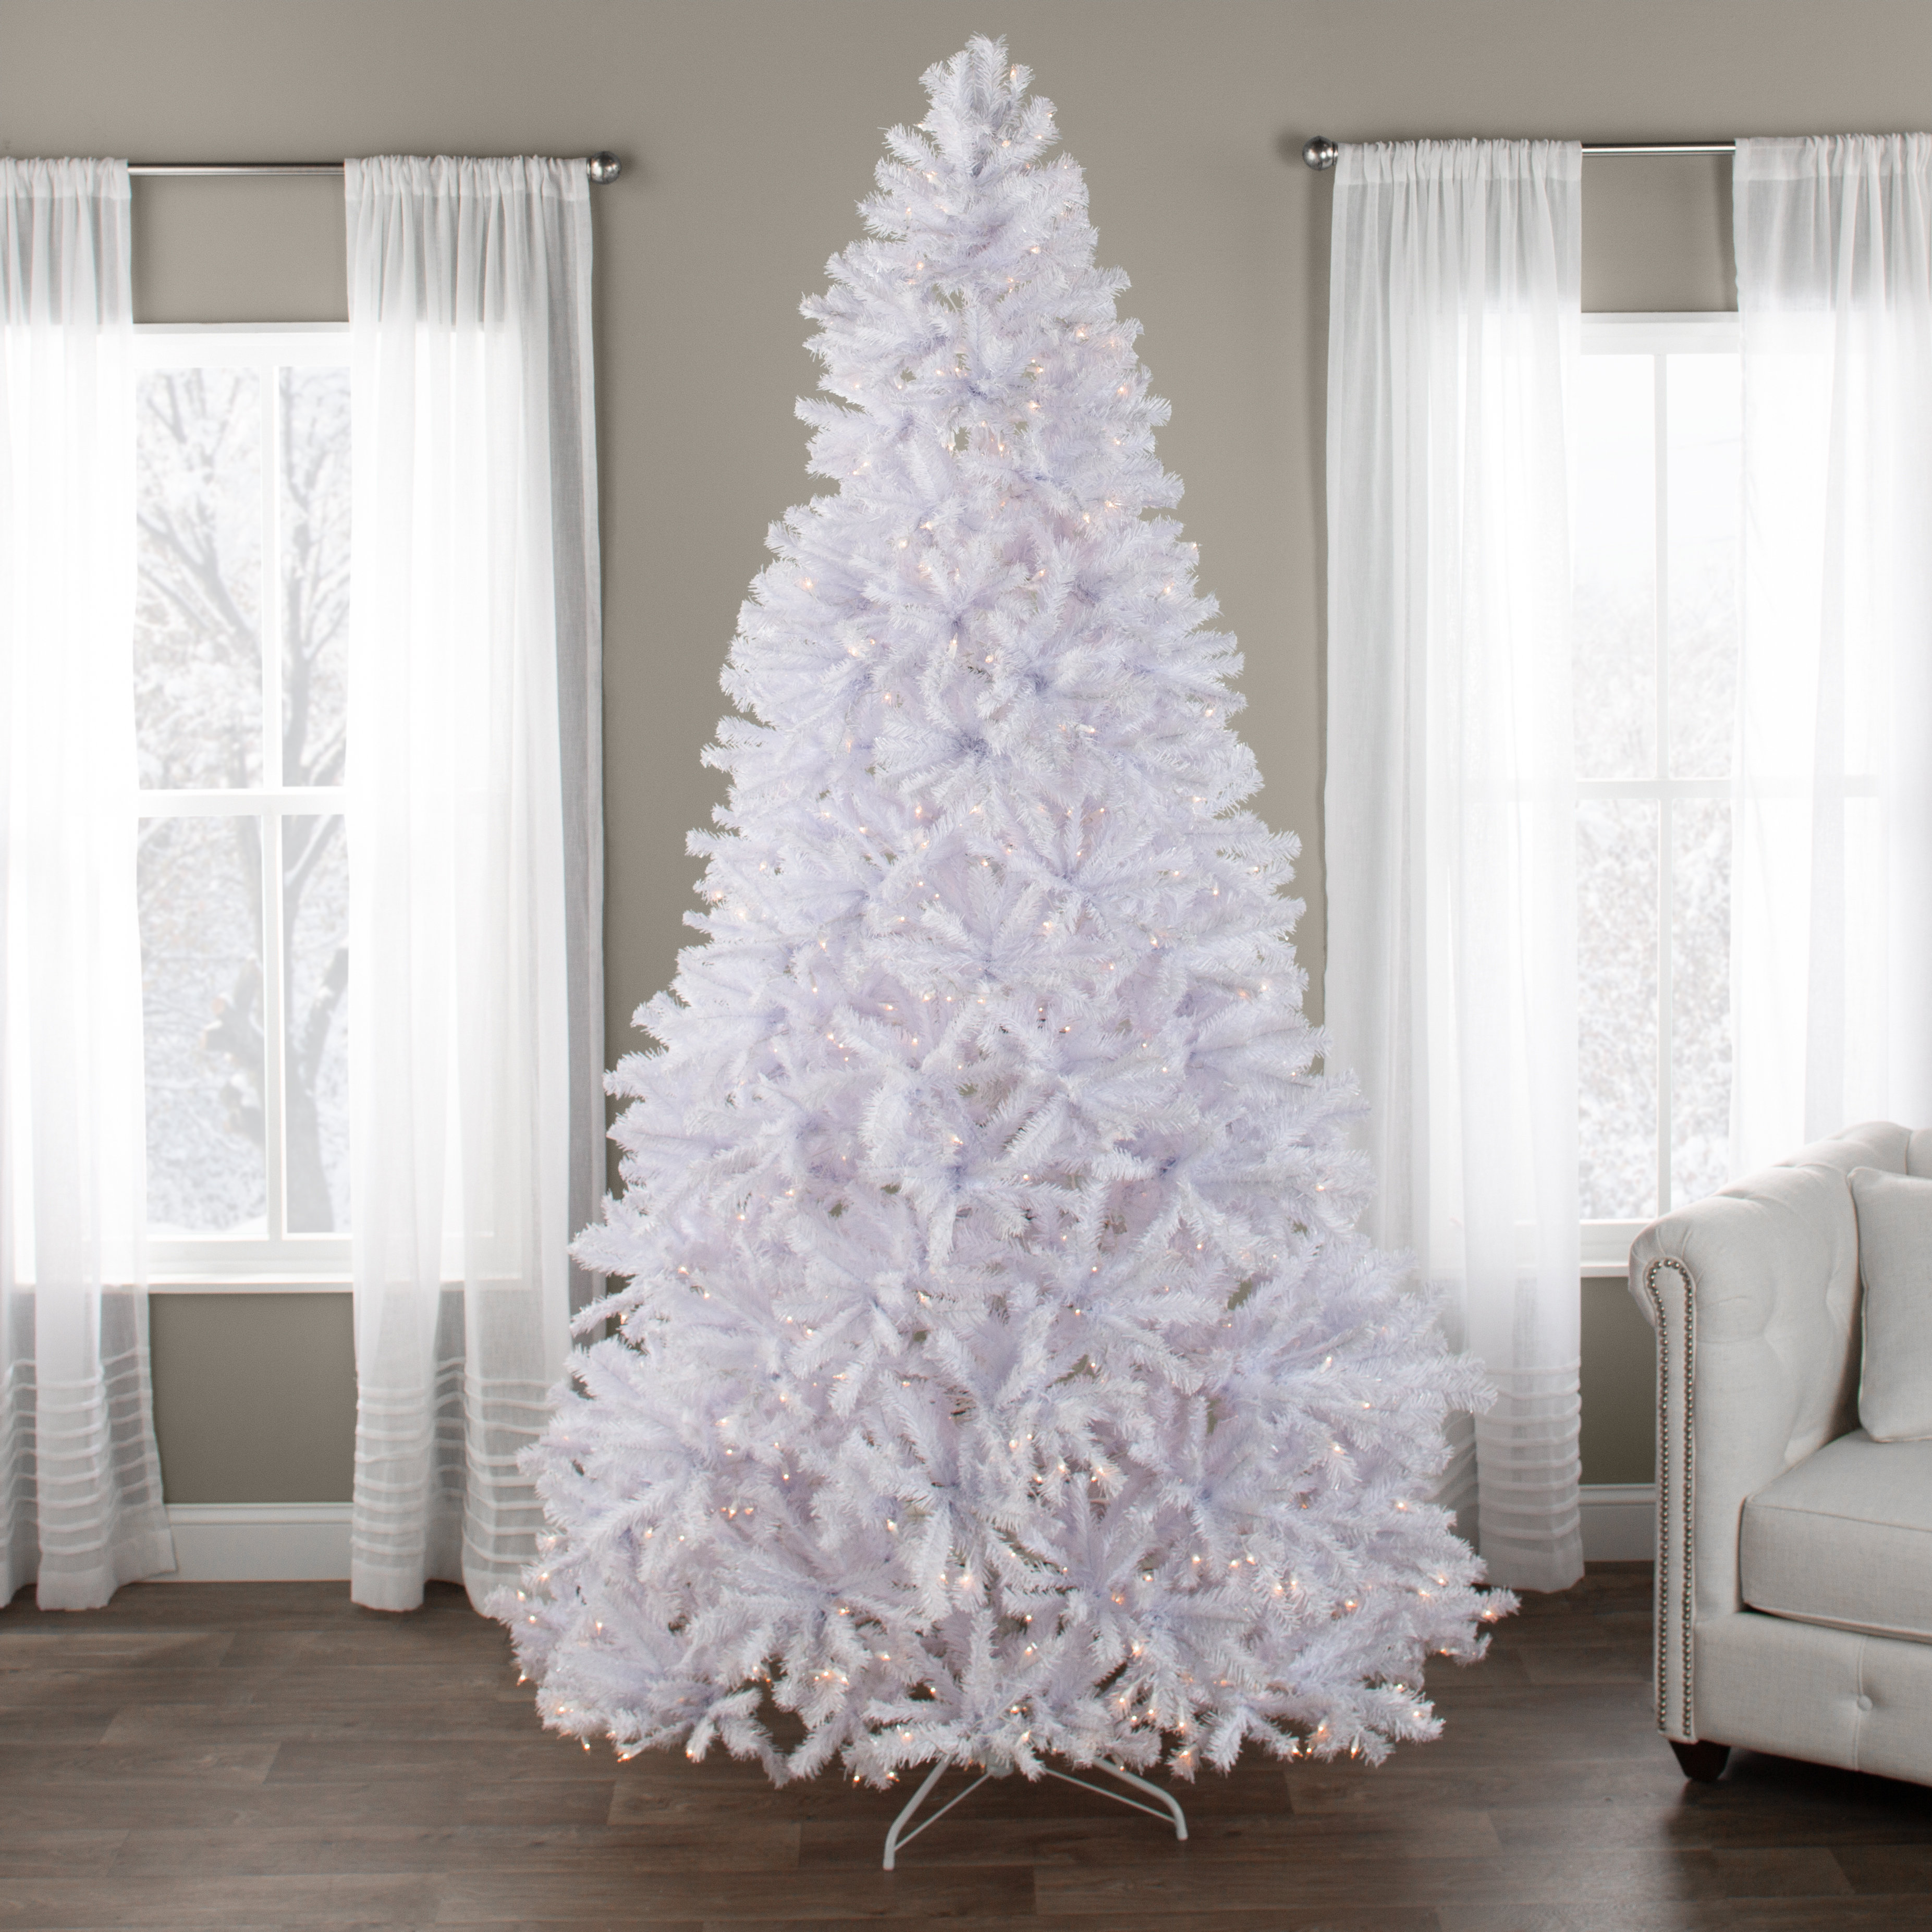 Wayfair Pre-Lit Christmas Trees On Sale You'll Love in 2023